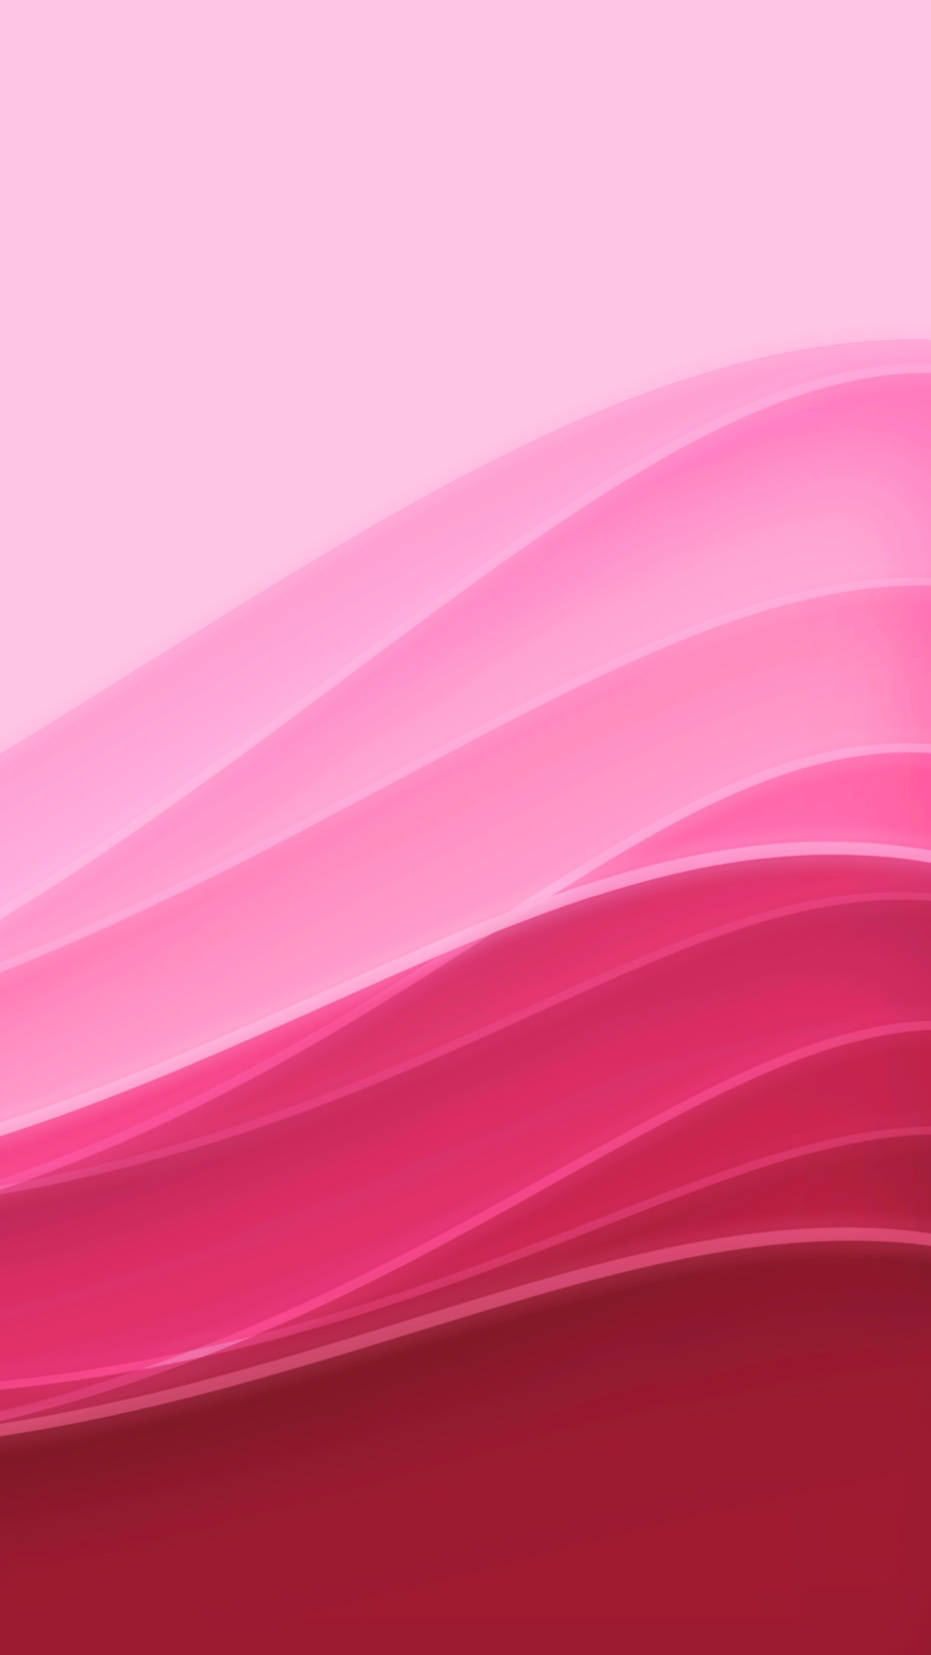 Plain Pink Gradient Waves Iphone Wallpaper